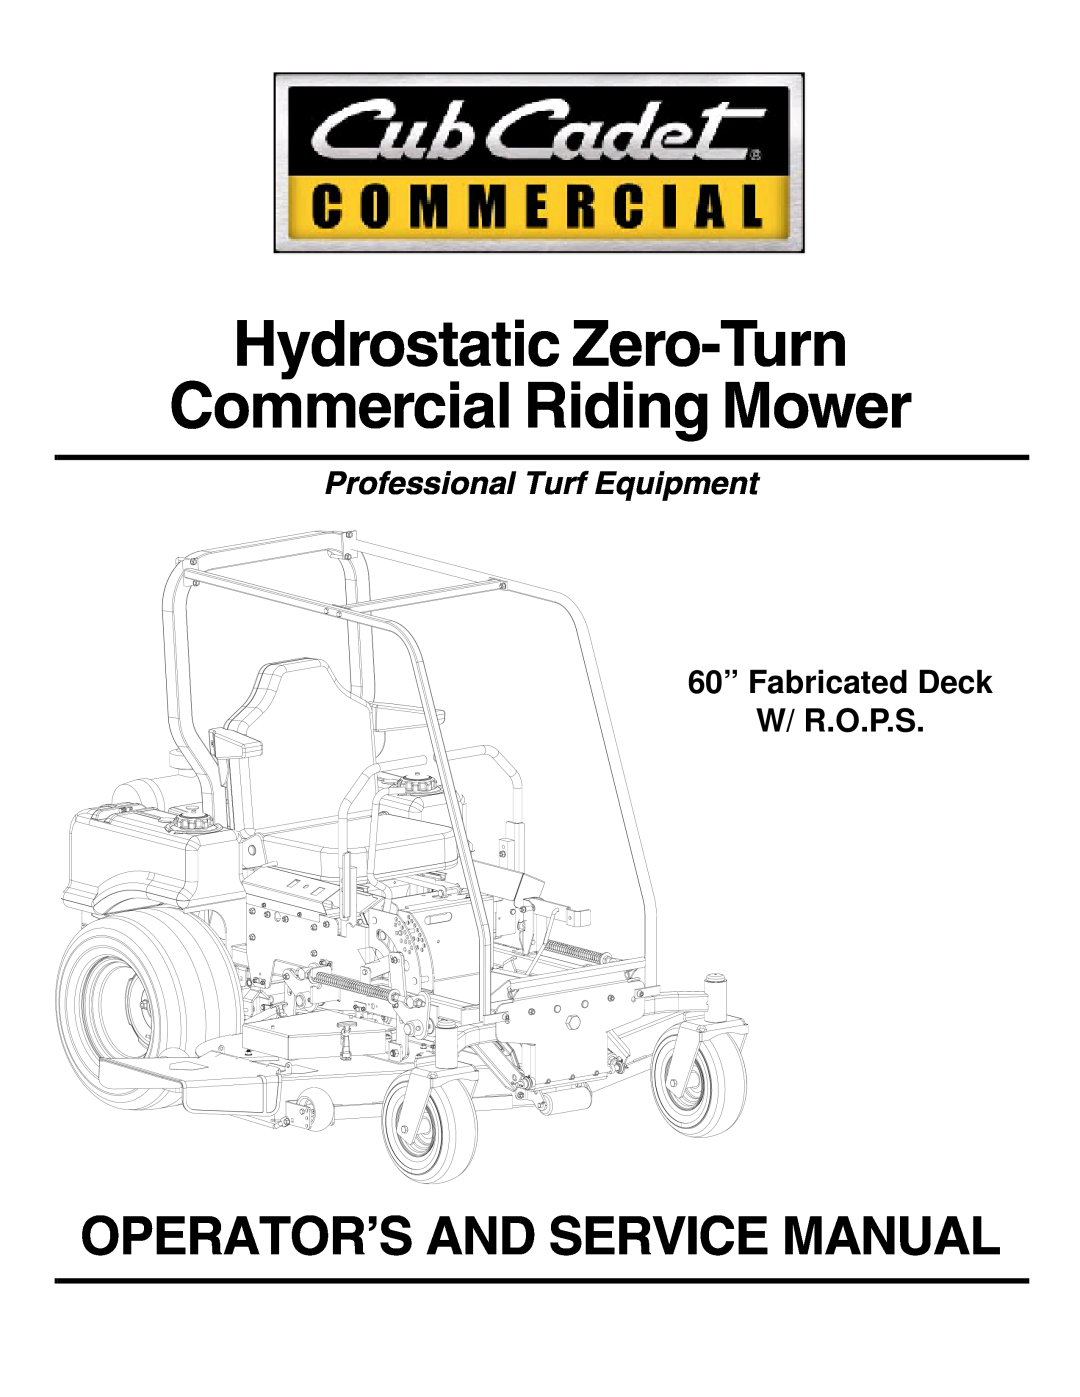 Cub Cadet Hydrostatic Zero-Turn Commercial Riding Mower Professional Turf Equipment service manual 